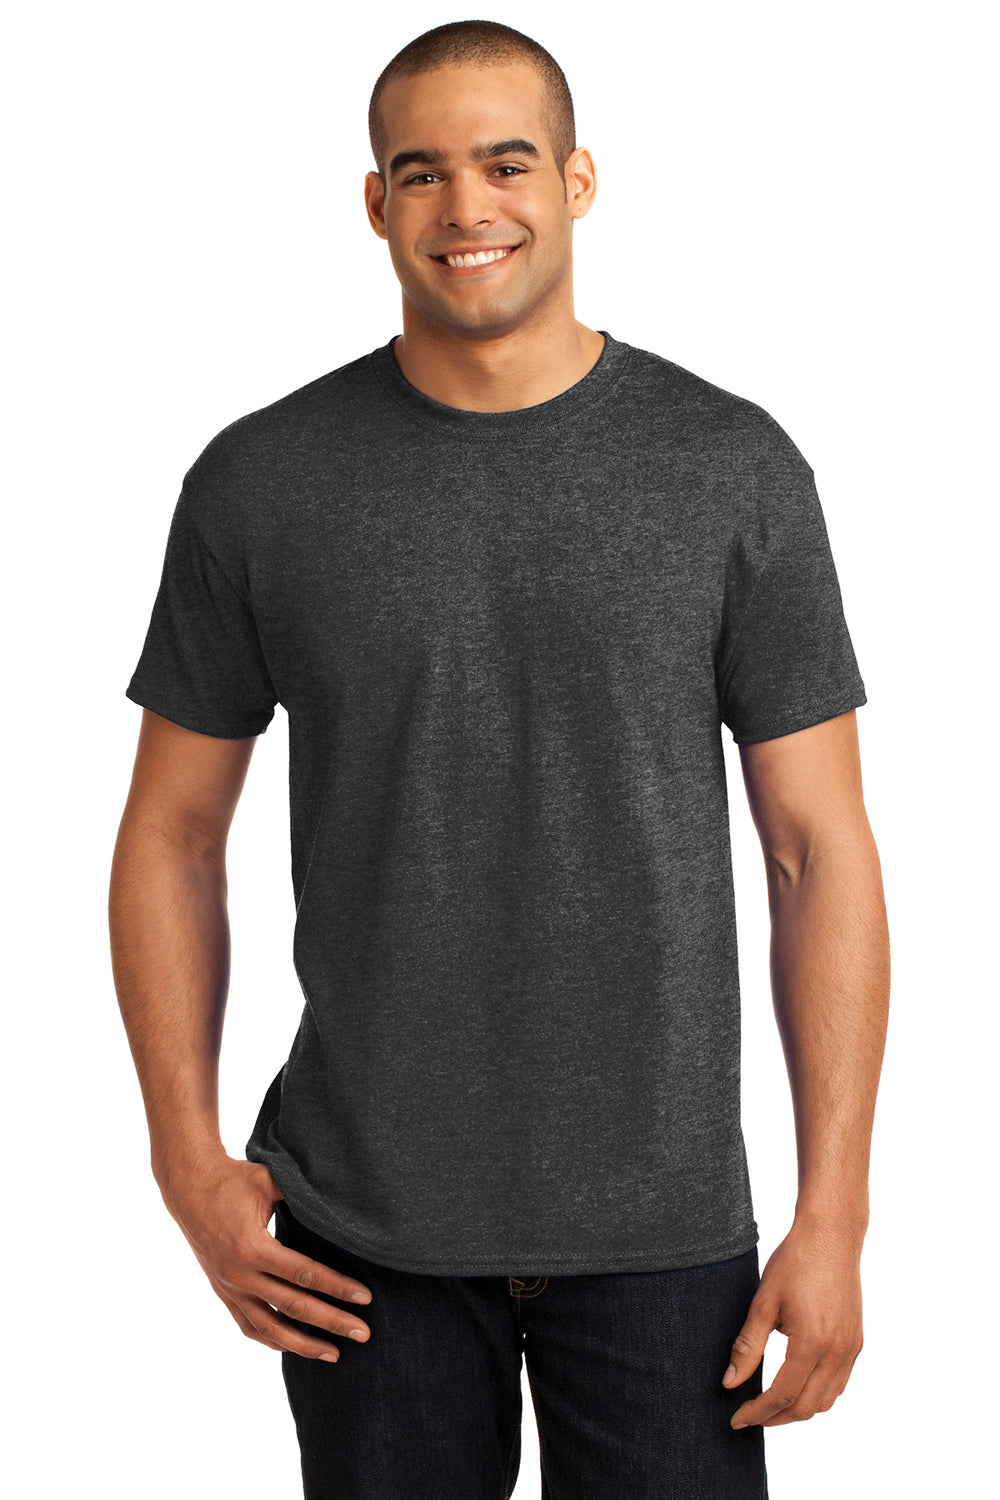 Hanes 5170 Mens EcoSmart Short Sleeve Crewneck T-Shirt Heather Charcoal Grey Front